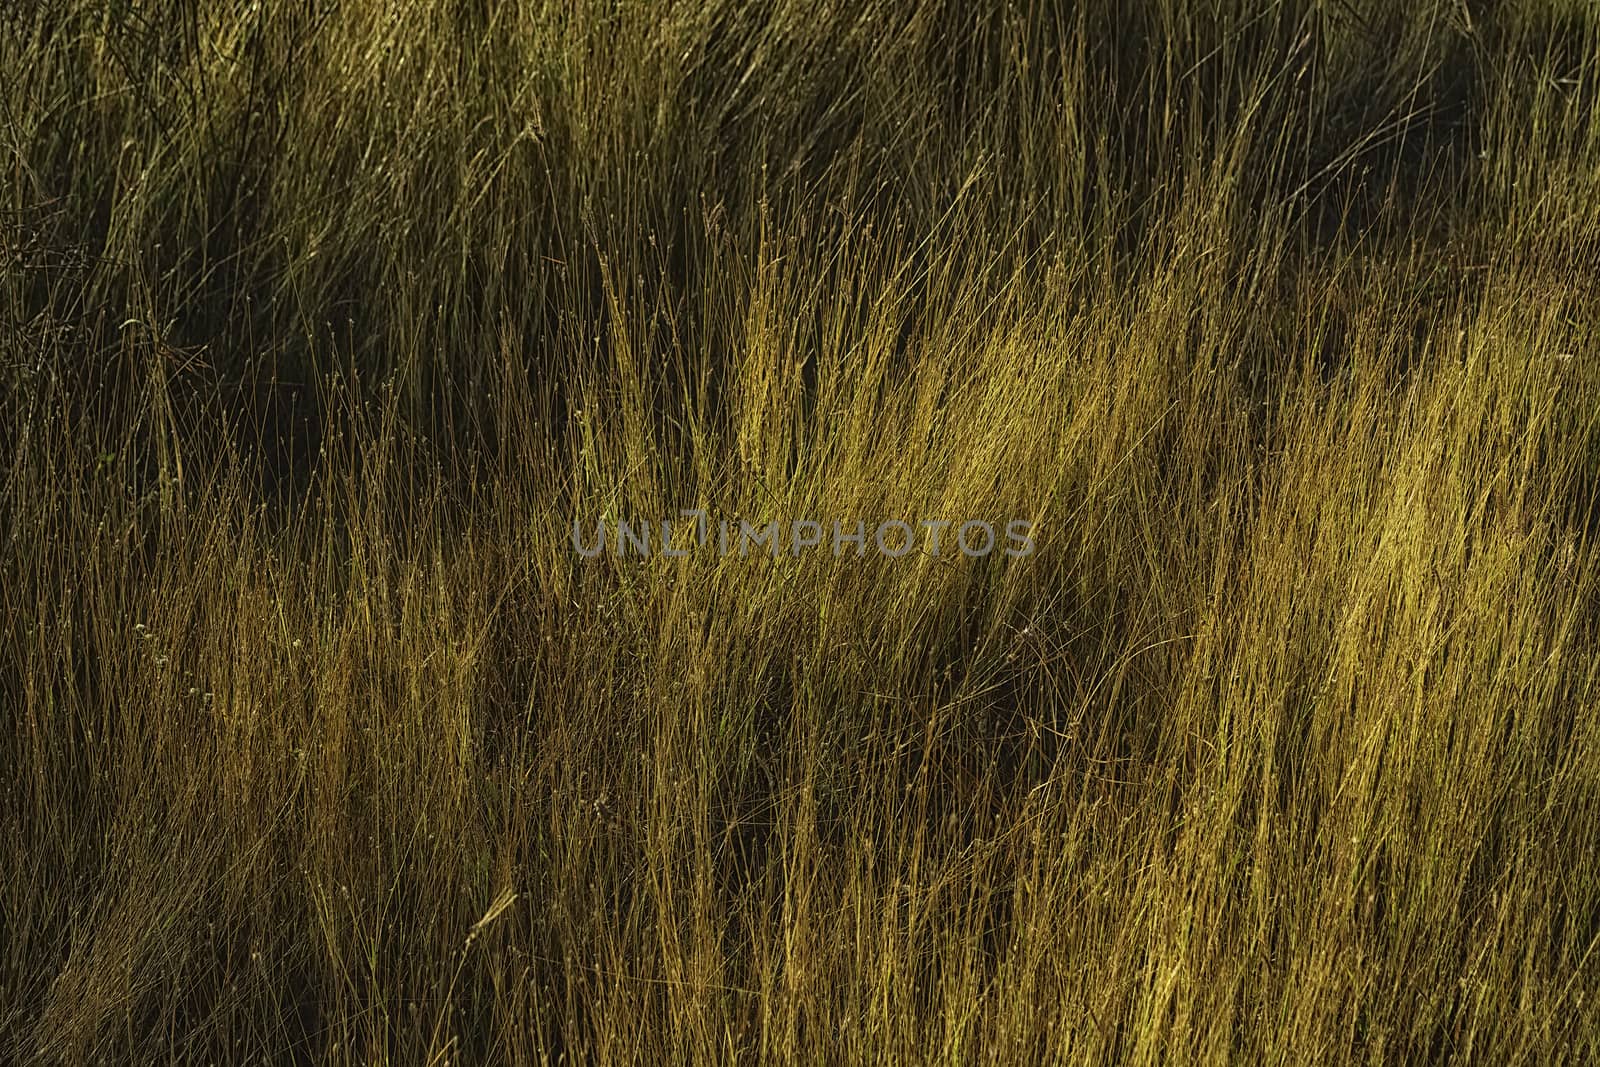 Sunrise Grass by tonyoquias